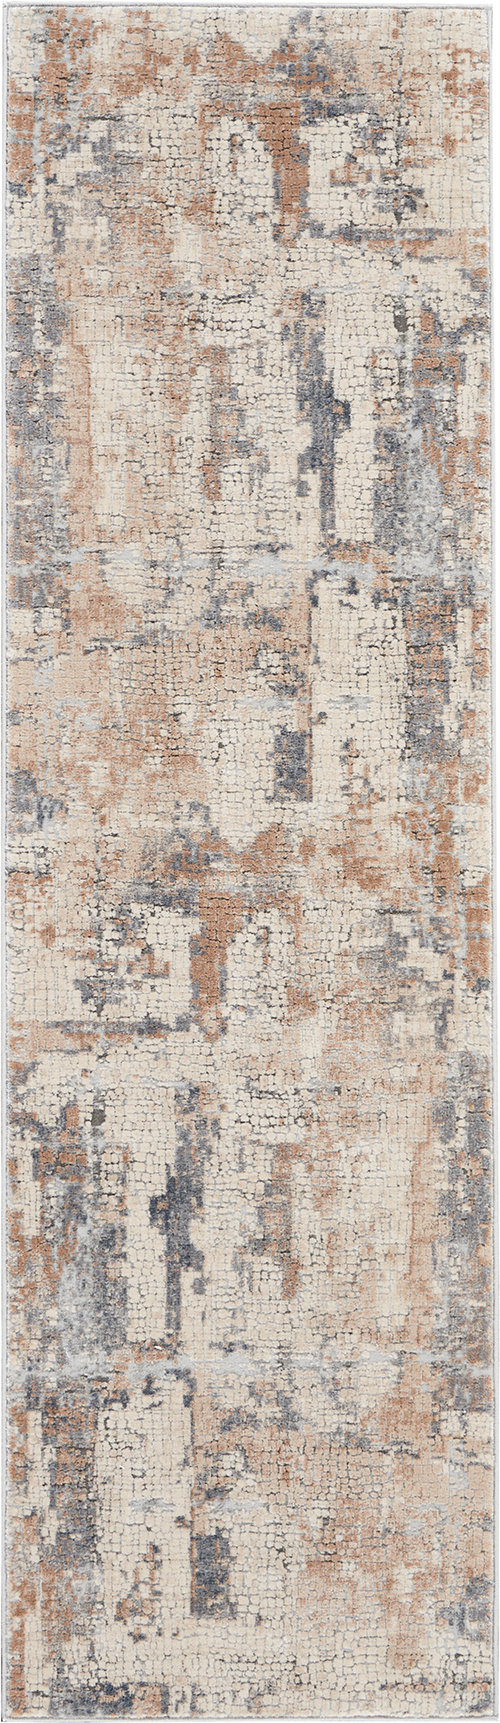 Nourison Rugs - Rustic Textures Runner RUS06 Rug in Beige / Grey - 2.3m x 0.66m